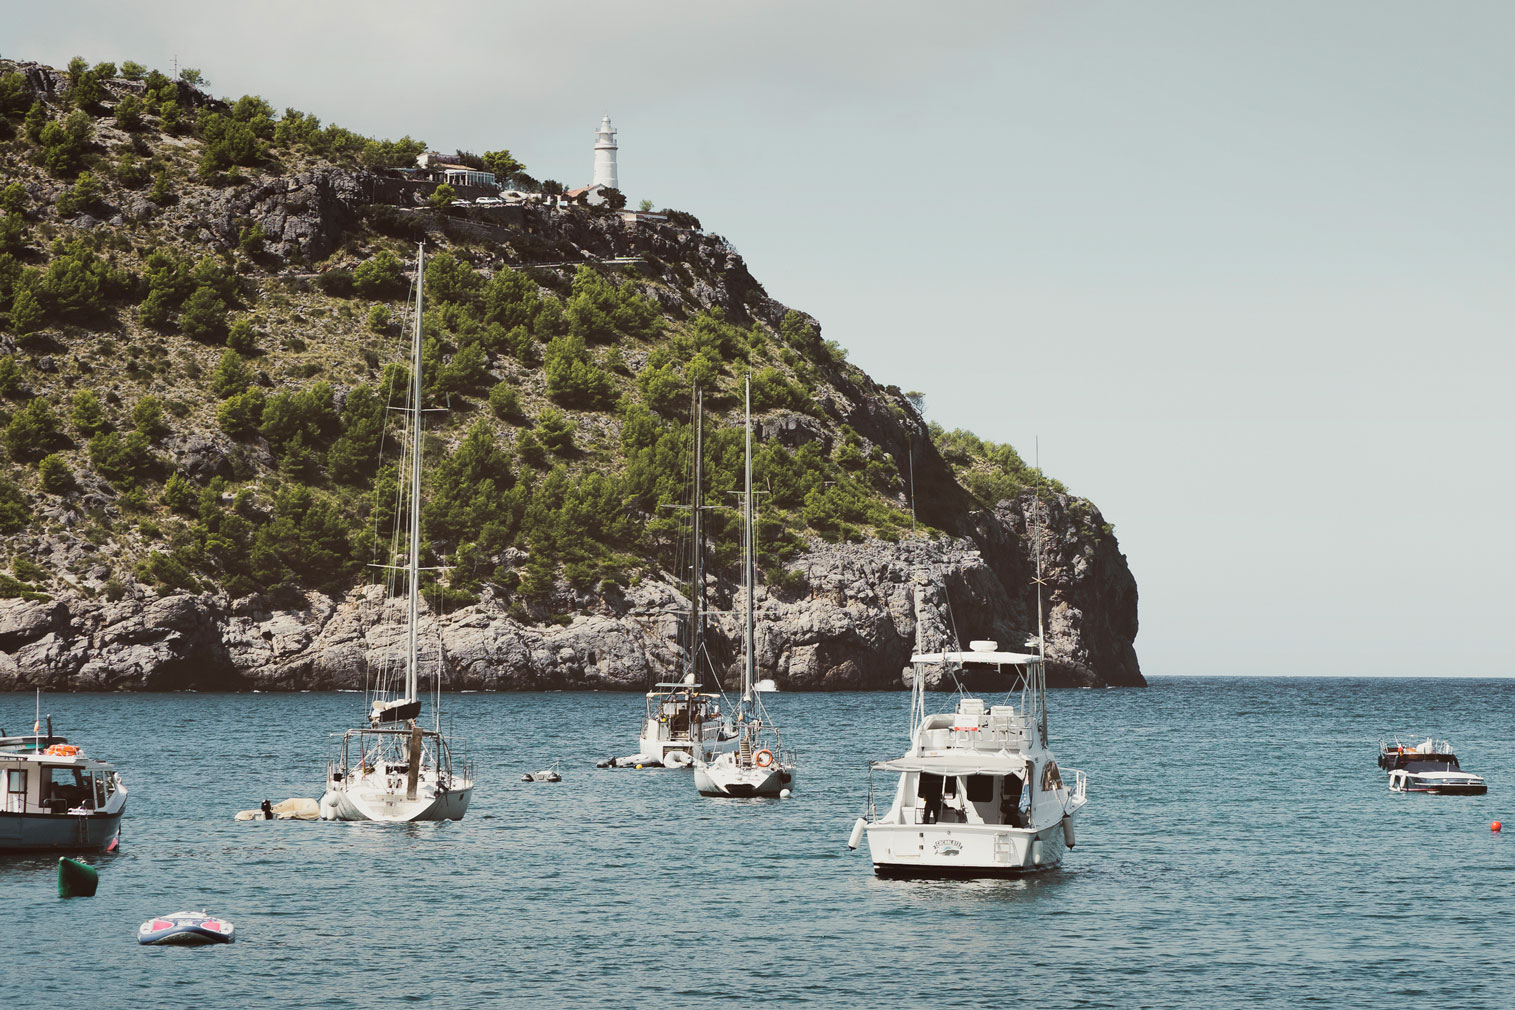 Can Gaspar brings Scandinavian minimalism to Mallorca